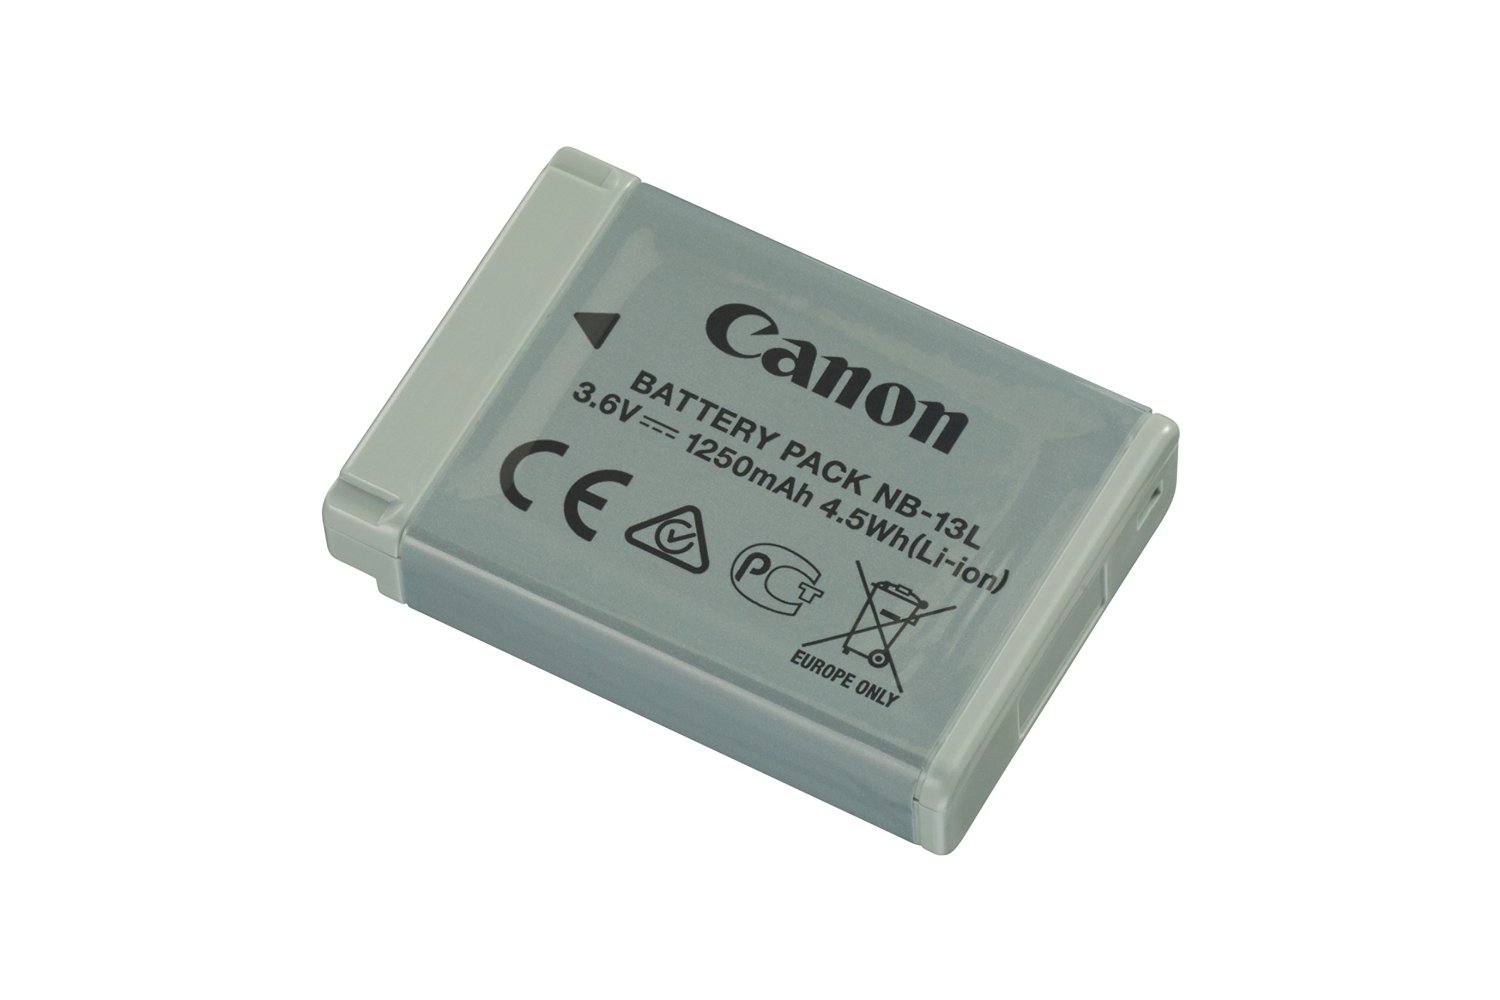 Canon batterie Pack NB - 13L